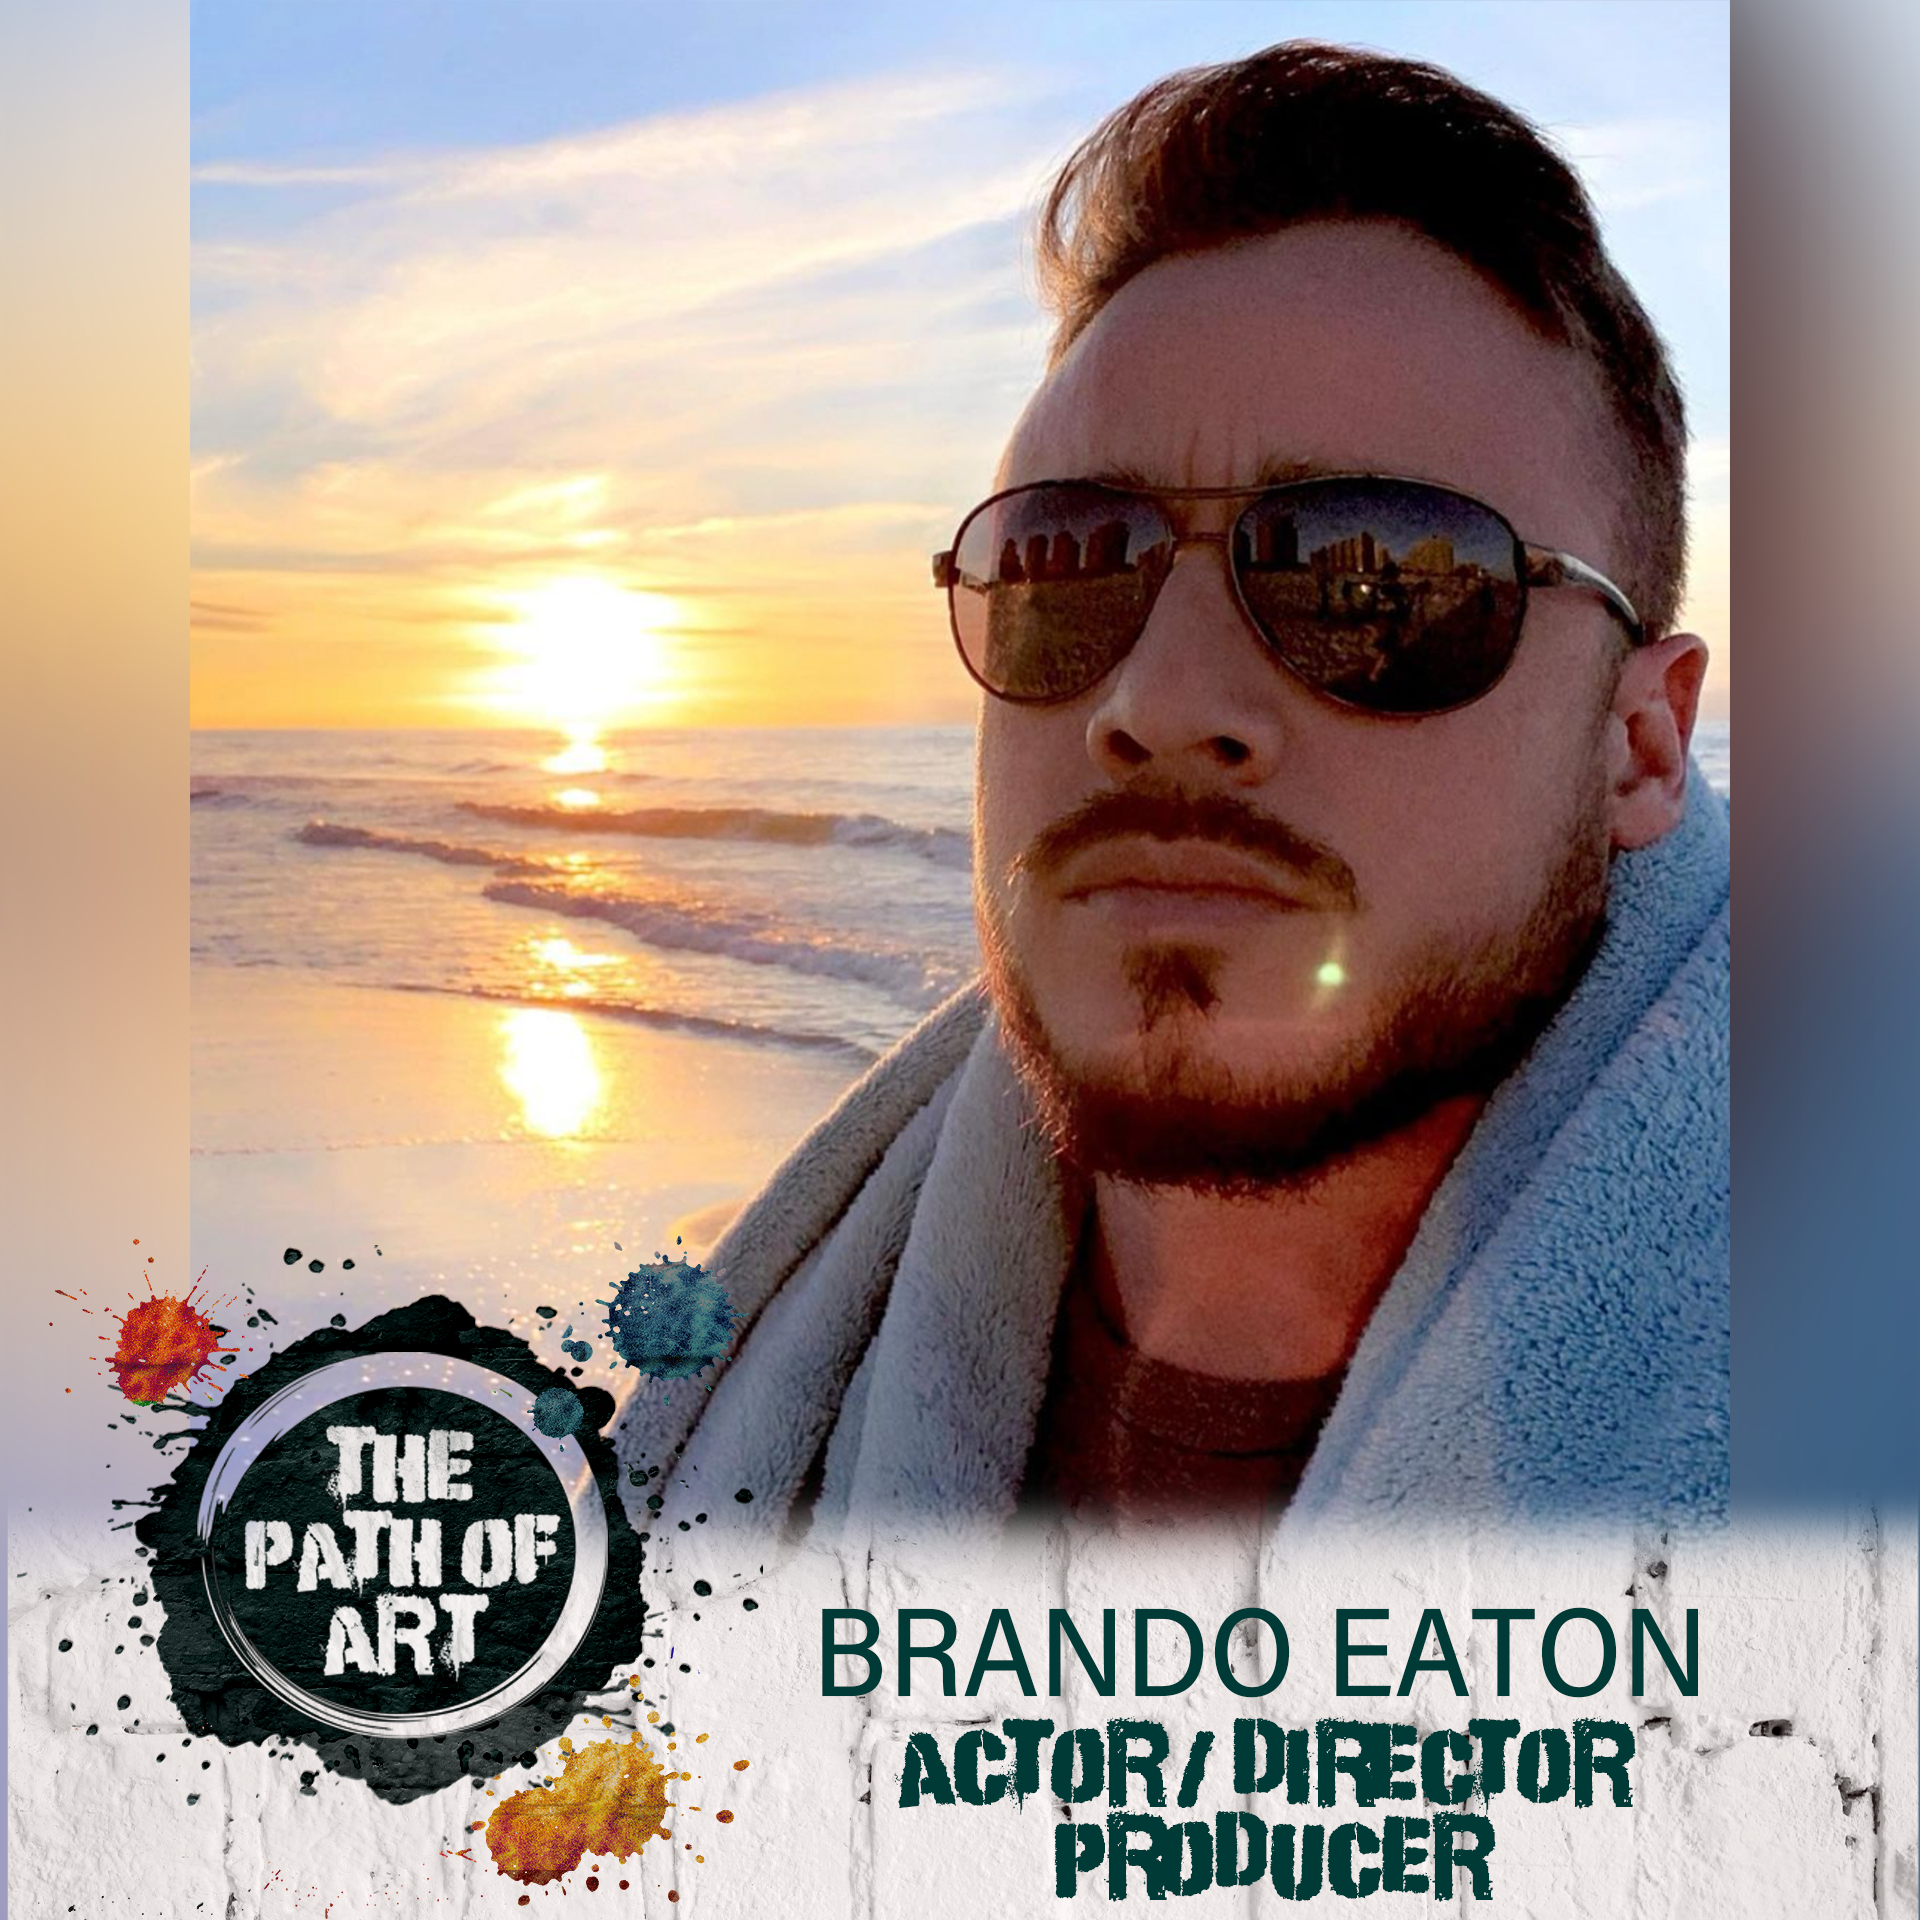 #11 Brando Eaton: Treat your passion like a career